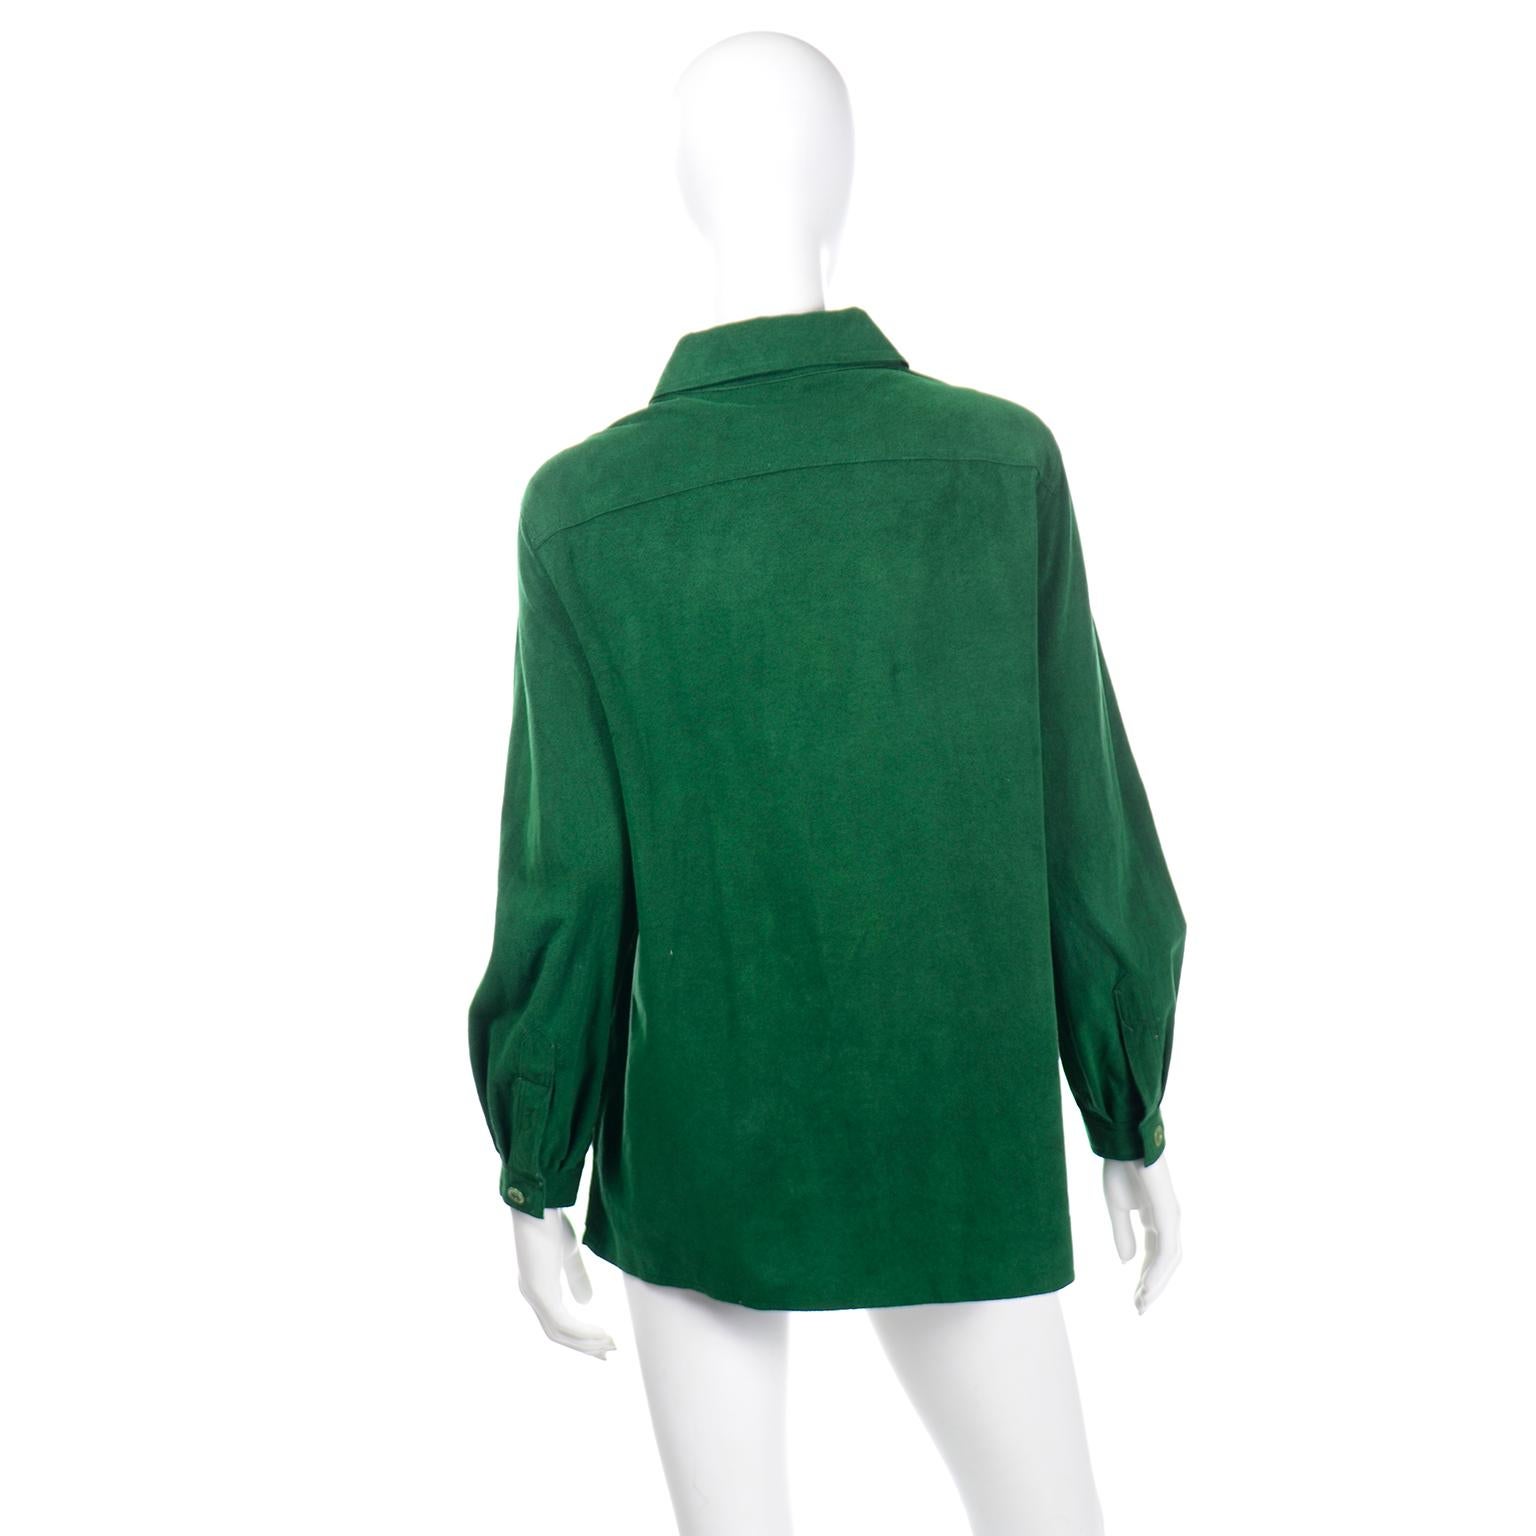 Women's 1970s Halston Green Ultrasuede Button Front Chore Jacket Style Shirt